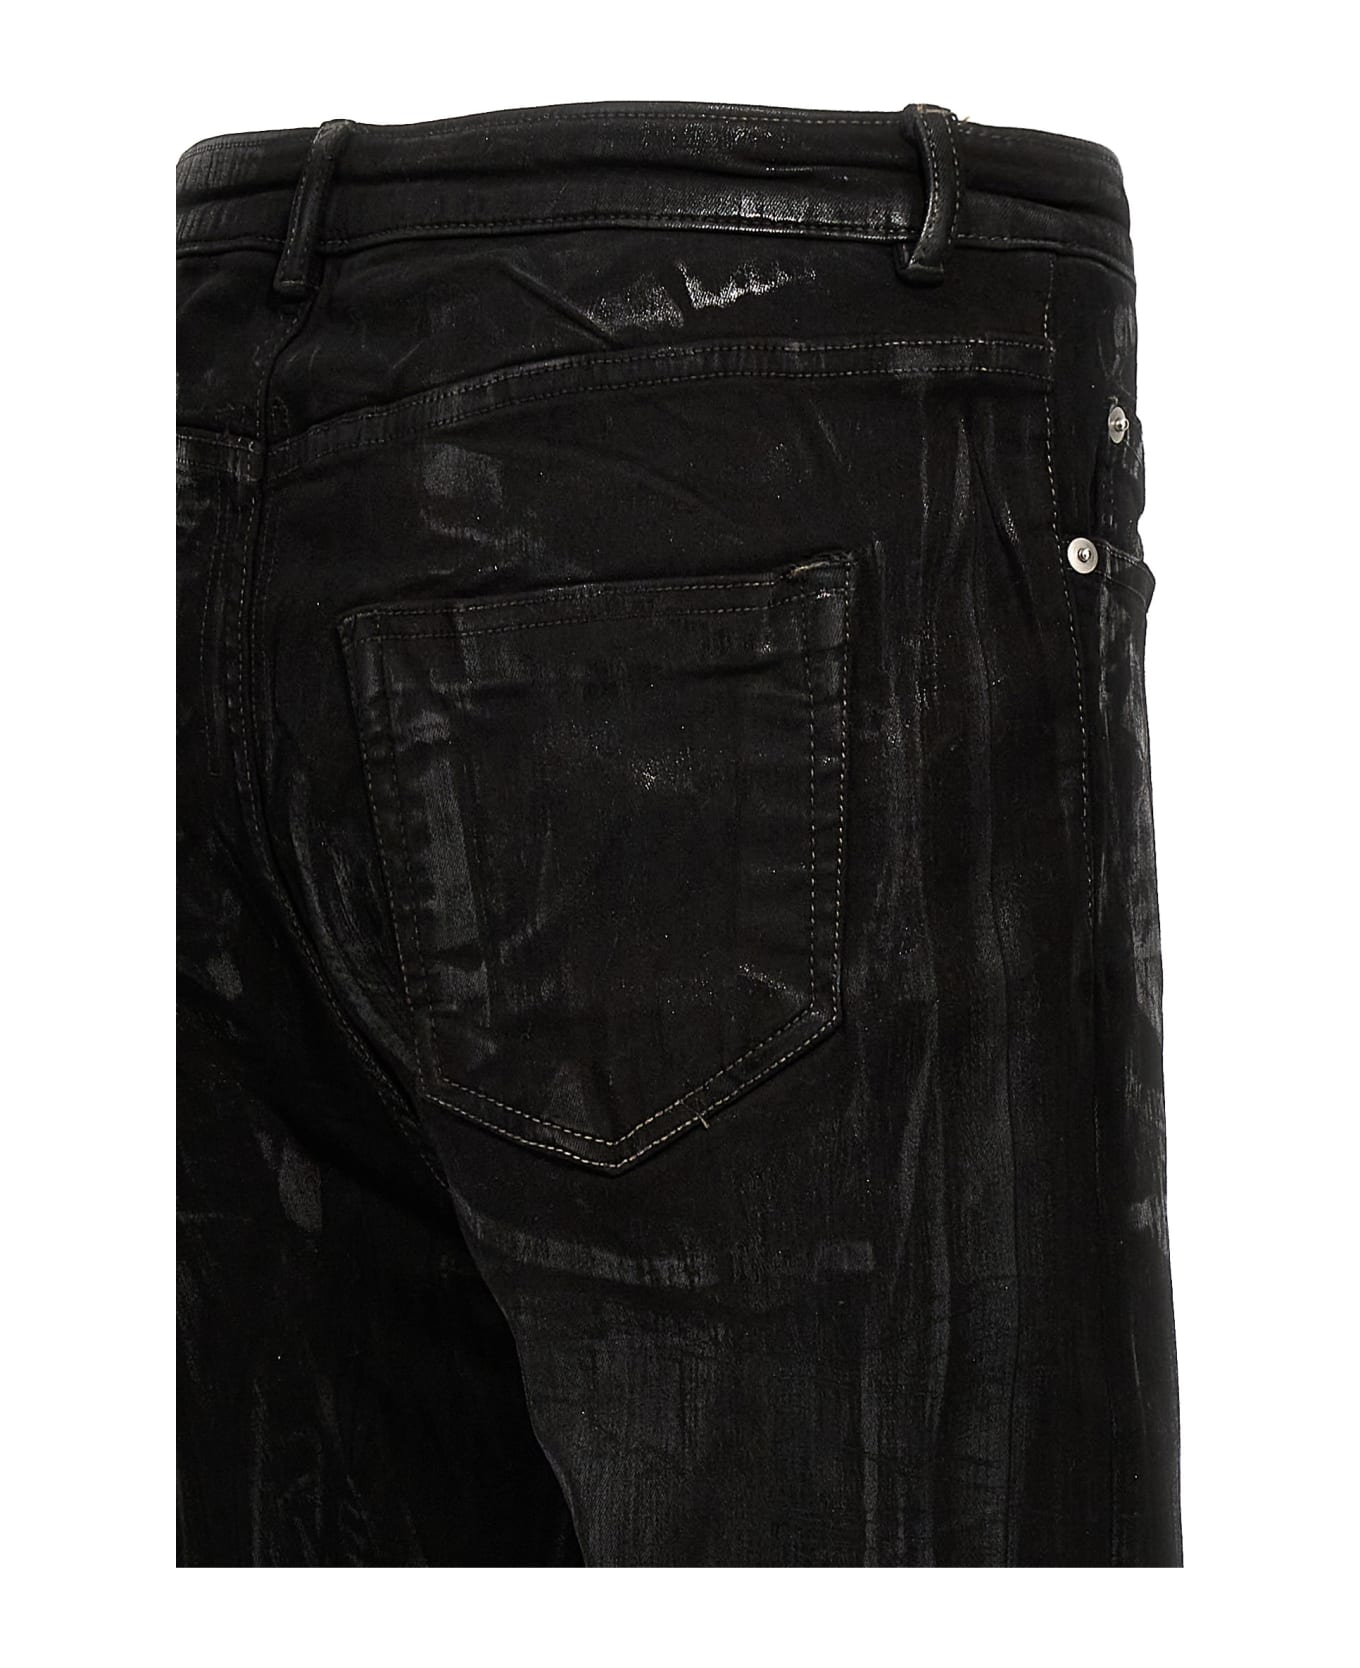 DRKSHDW 'detroit' Jeans - Black